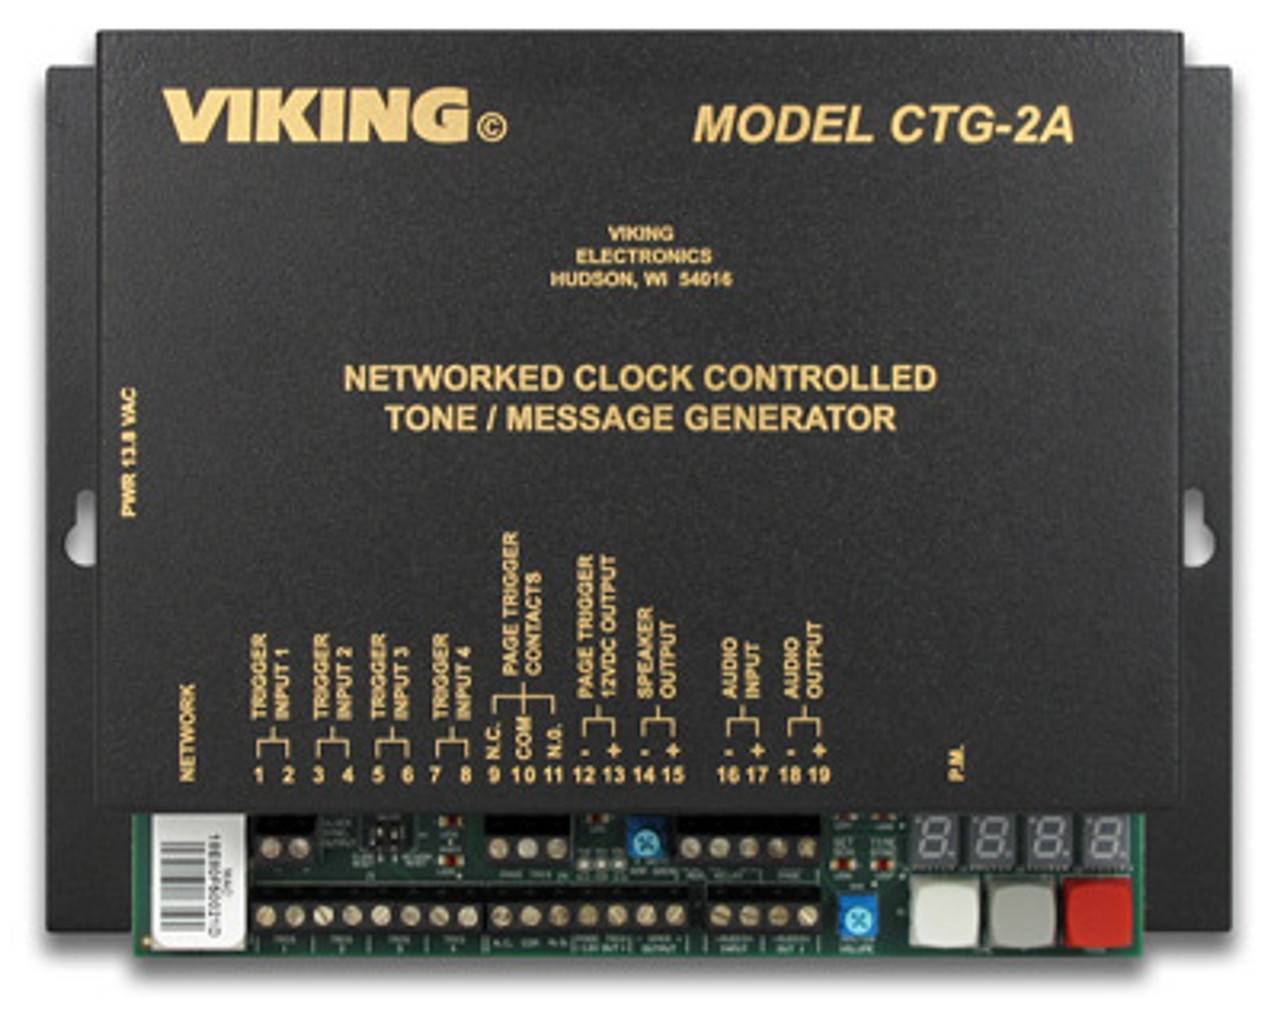 Network Clock Controlled Tone Generator